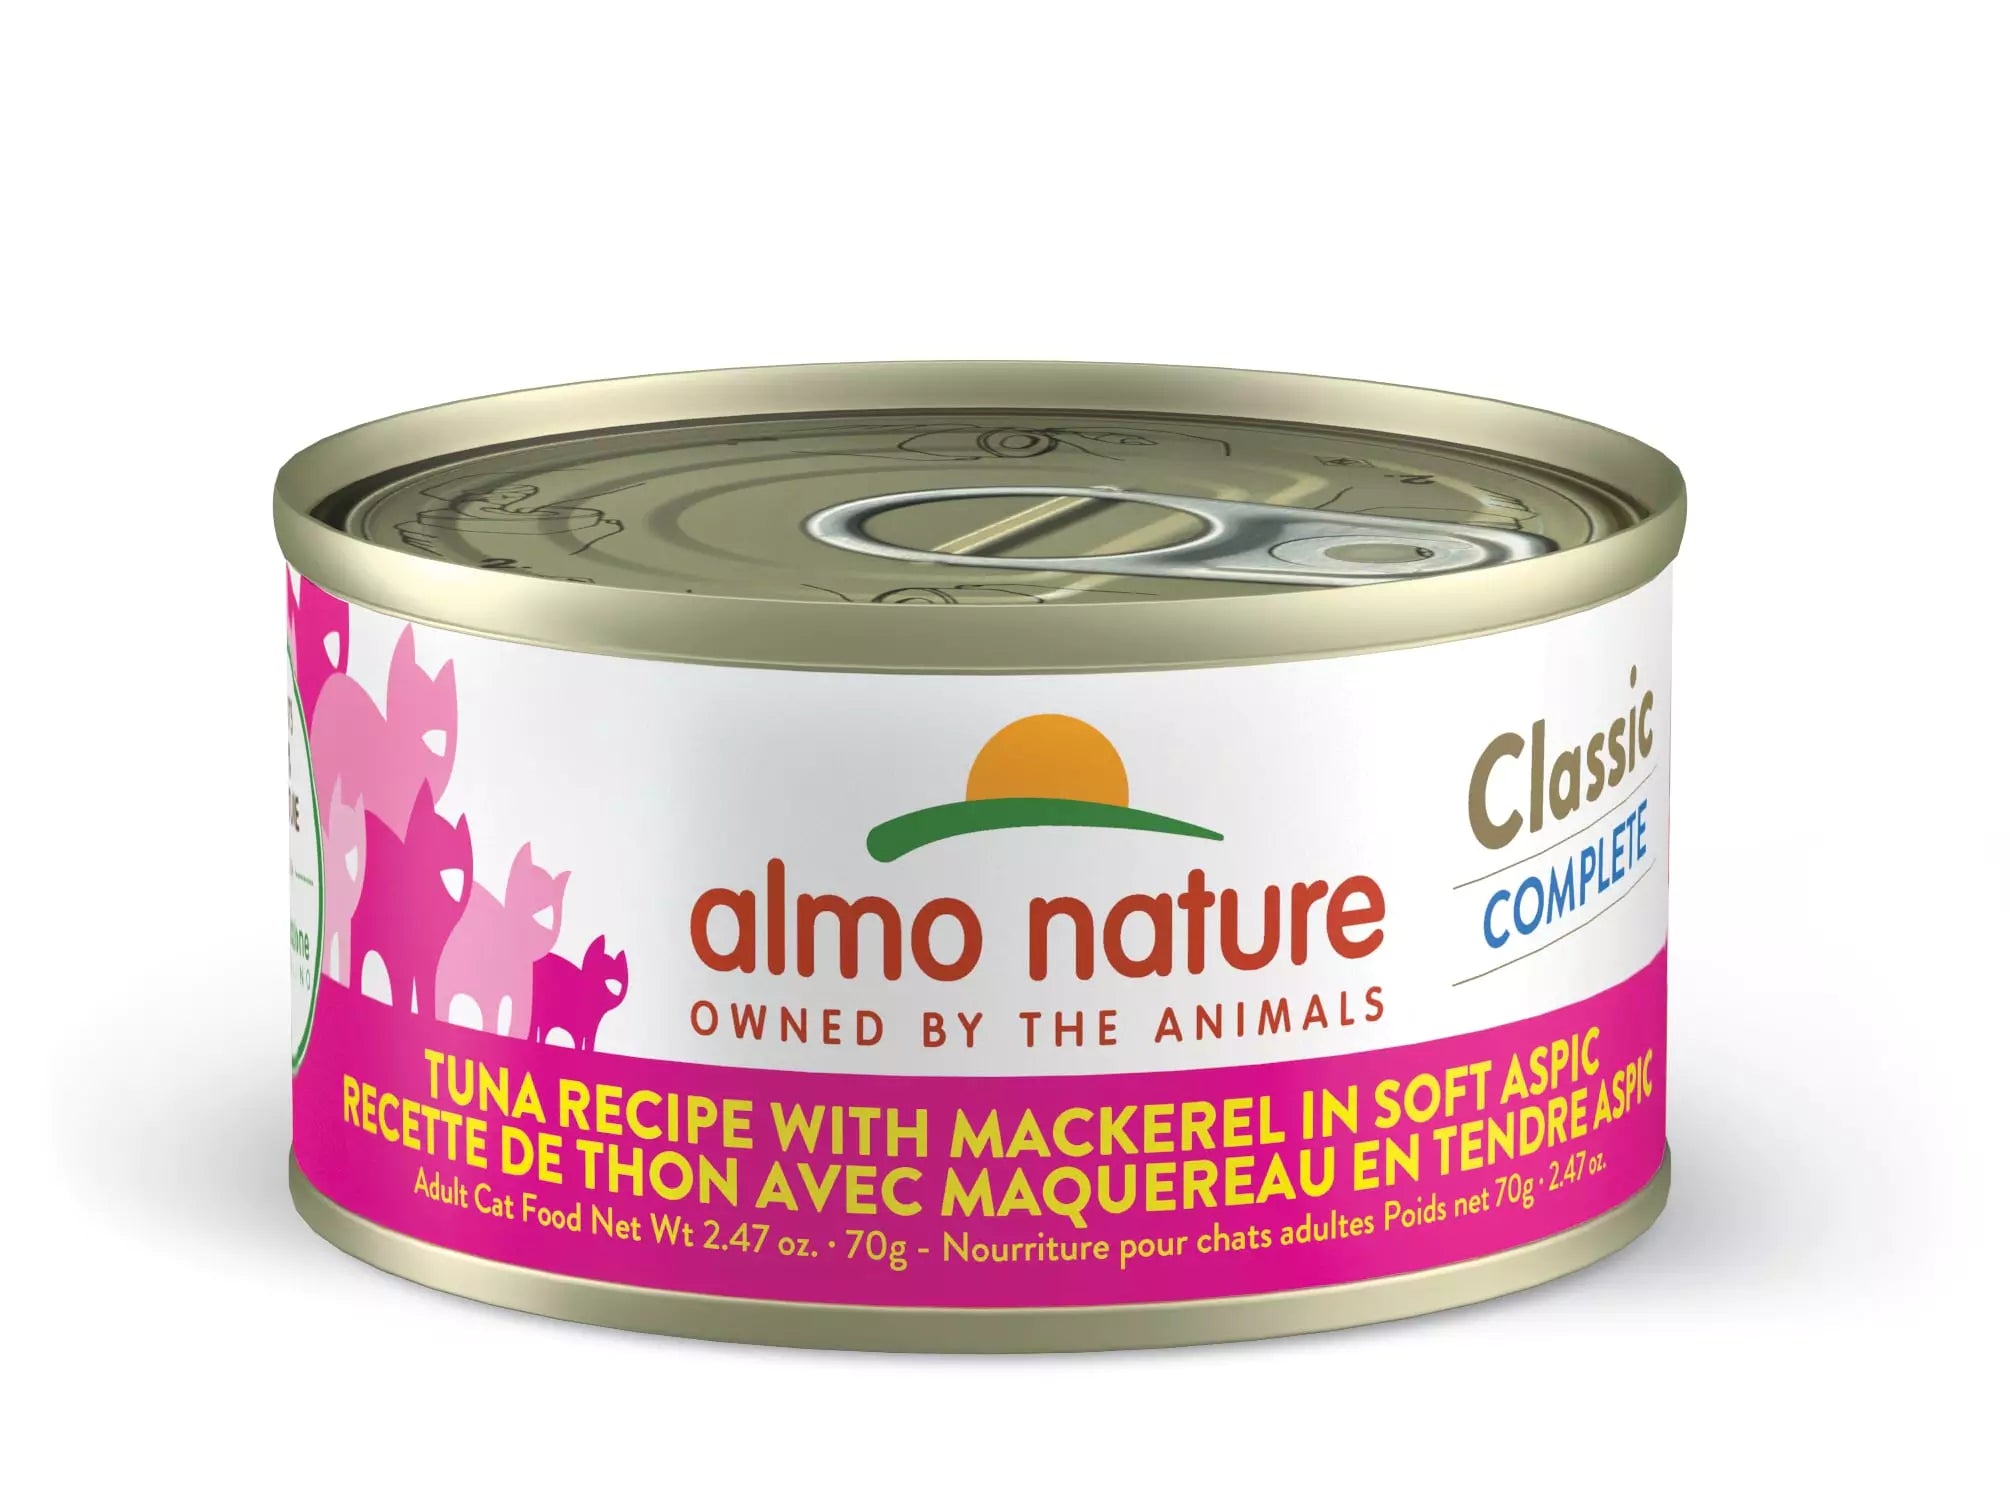 Almo Nature - Classic Complete Tuna Recipe With Mackerel In Soft Aspic (Wet Cat Food)